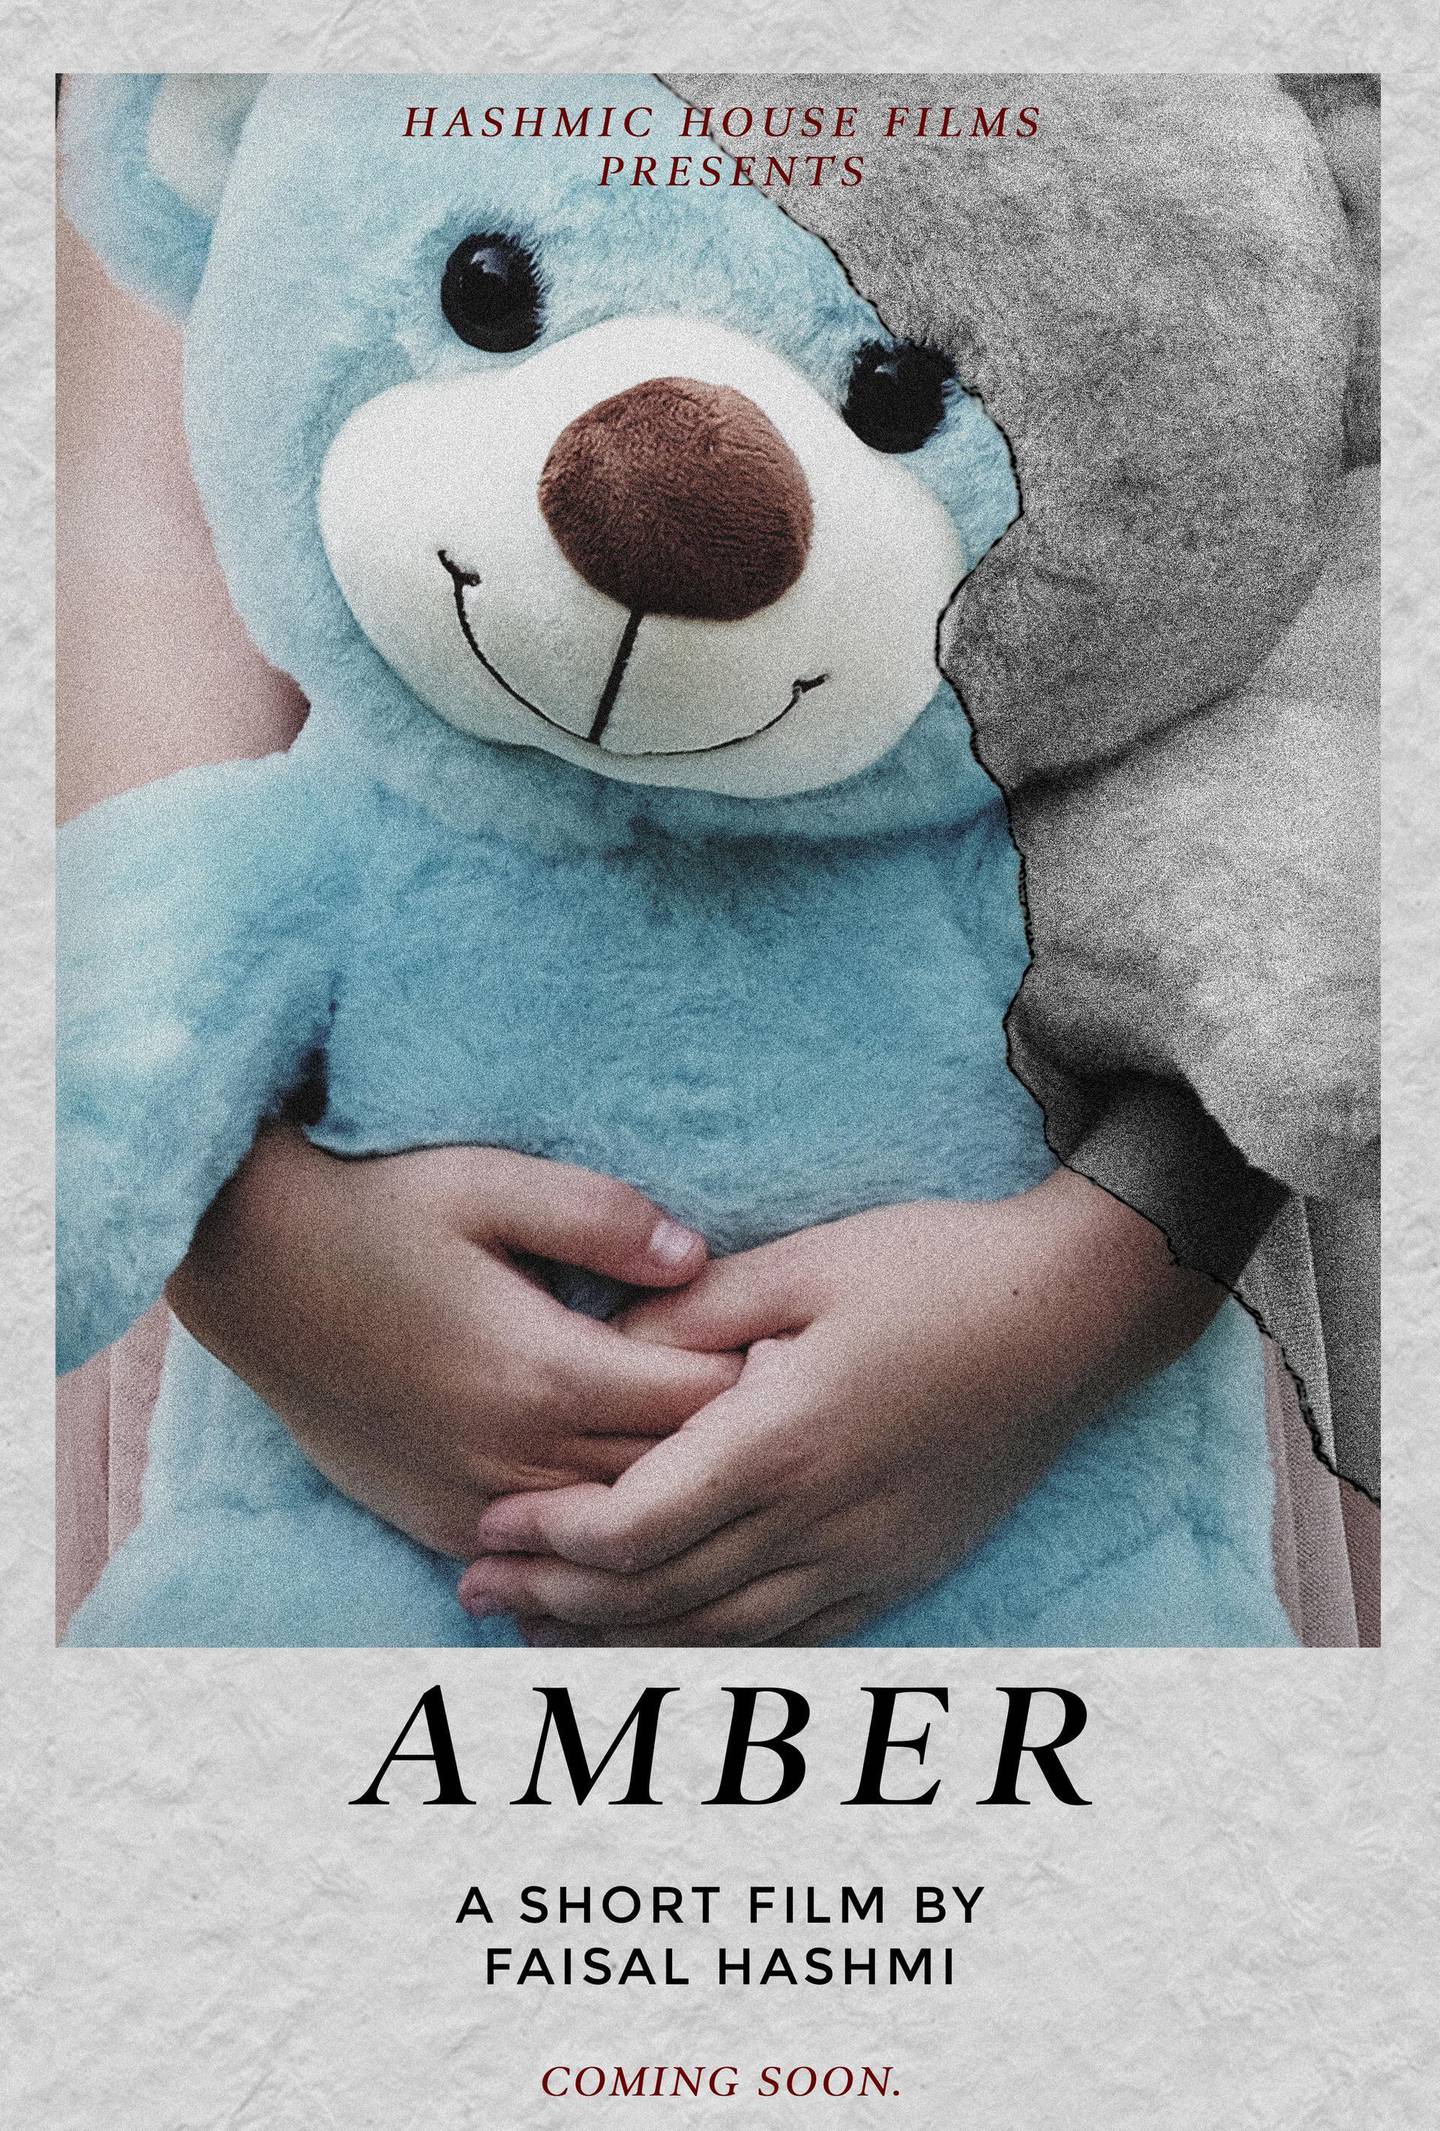 'Amber', a dramatic horror short film, is directed by Faisal Hashmi. Faisal Hashmi